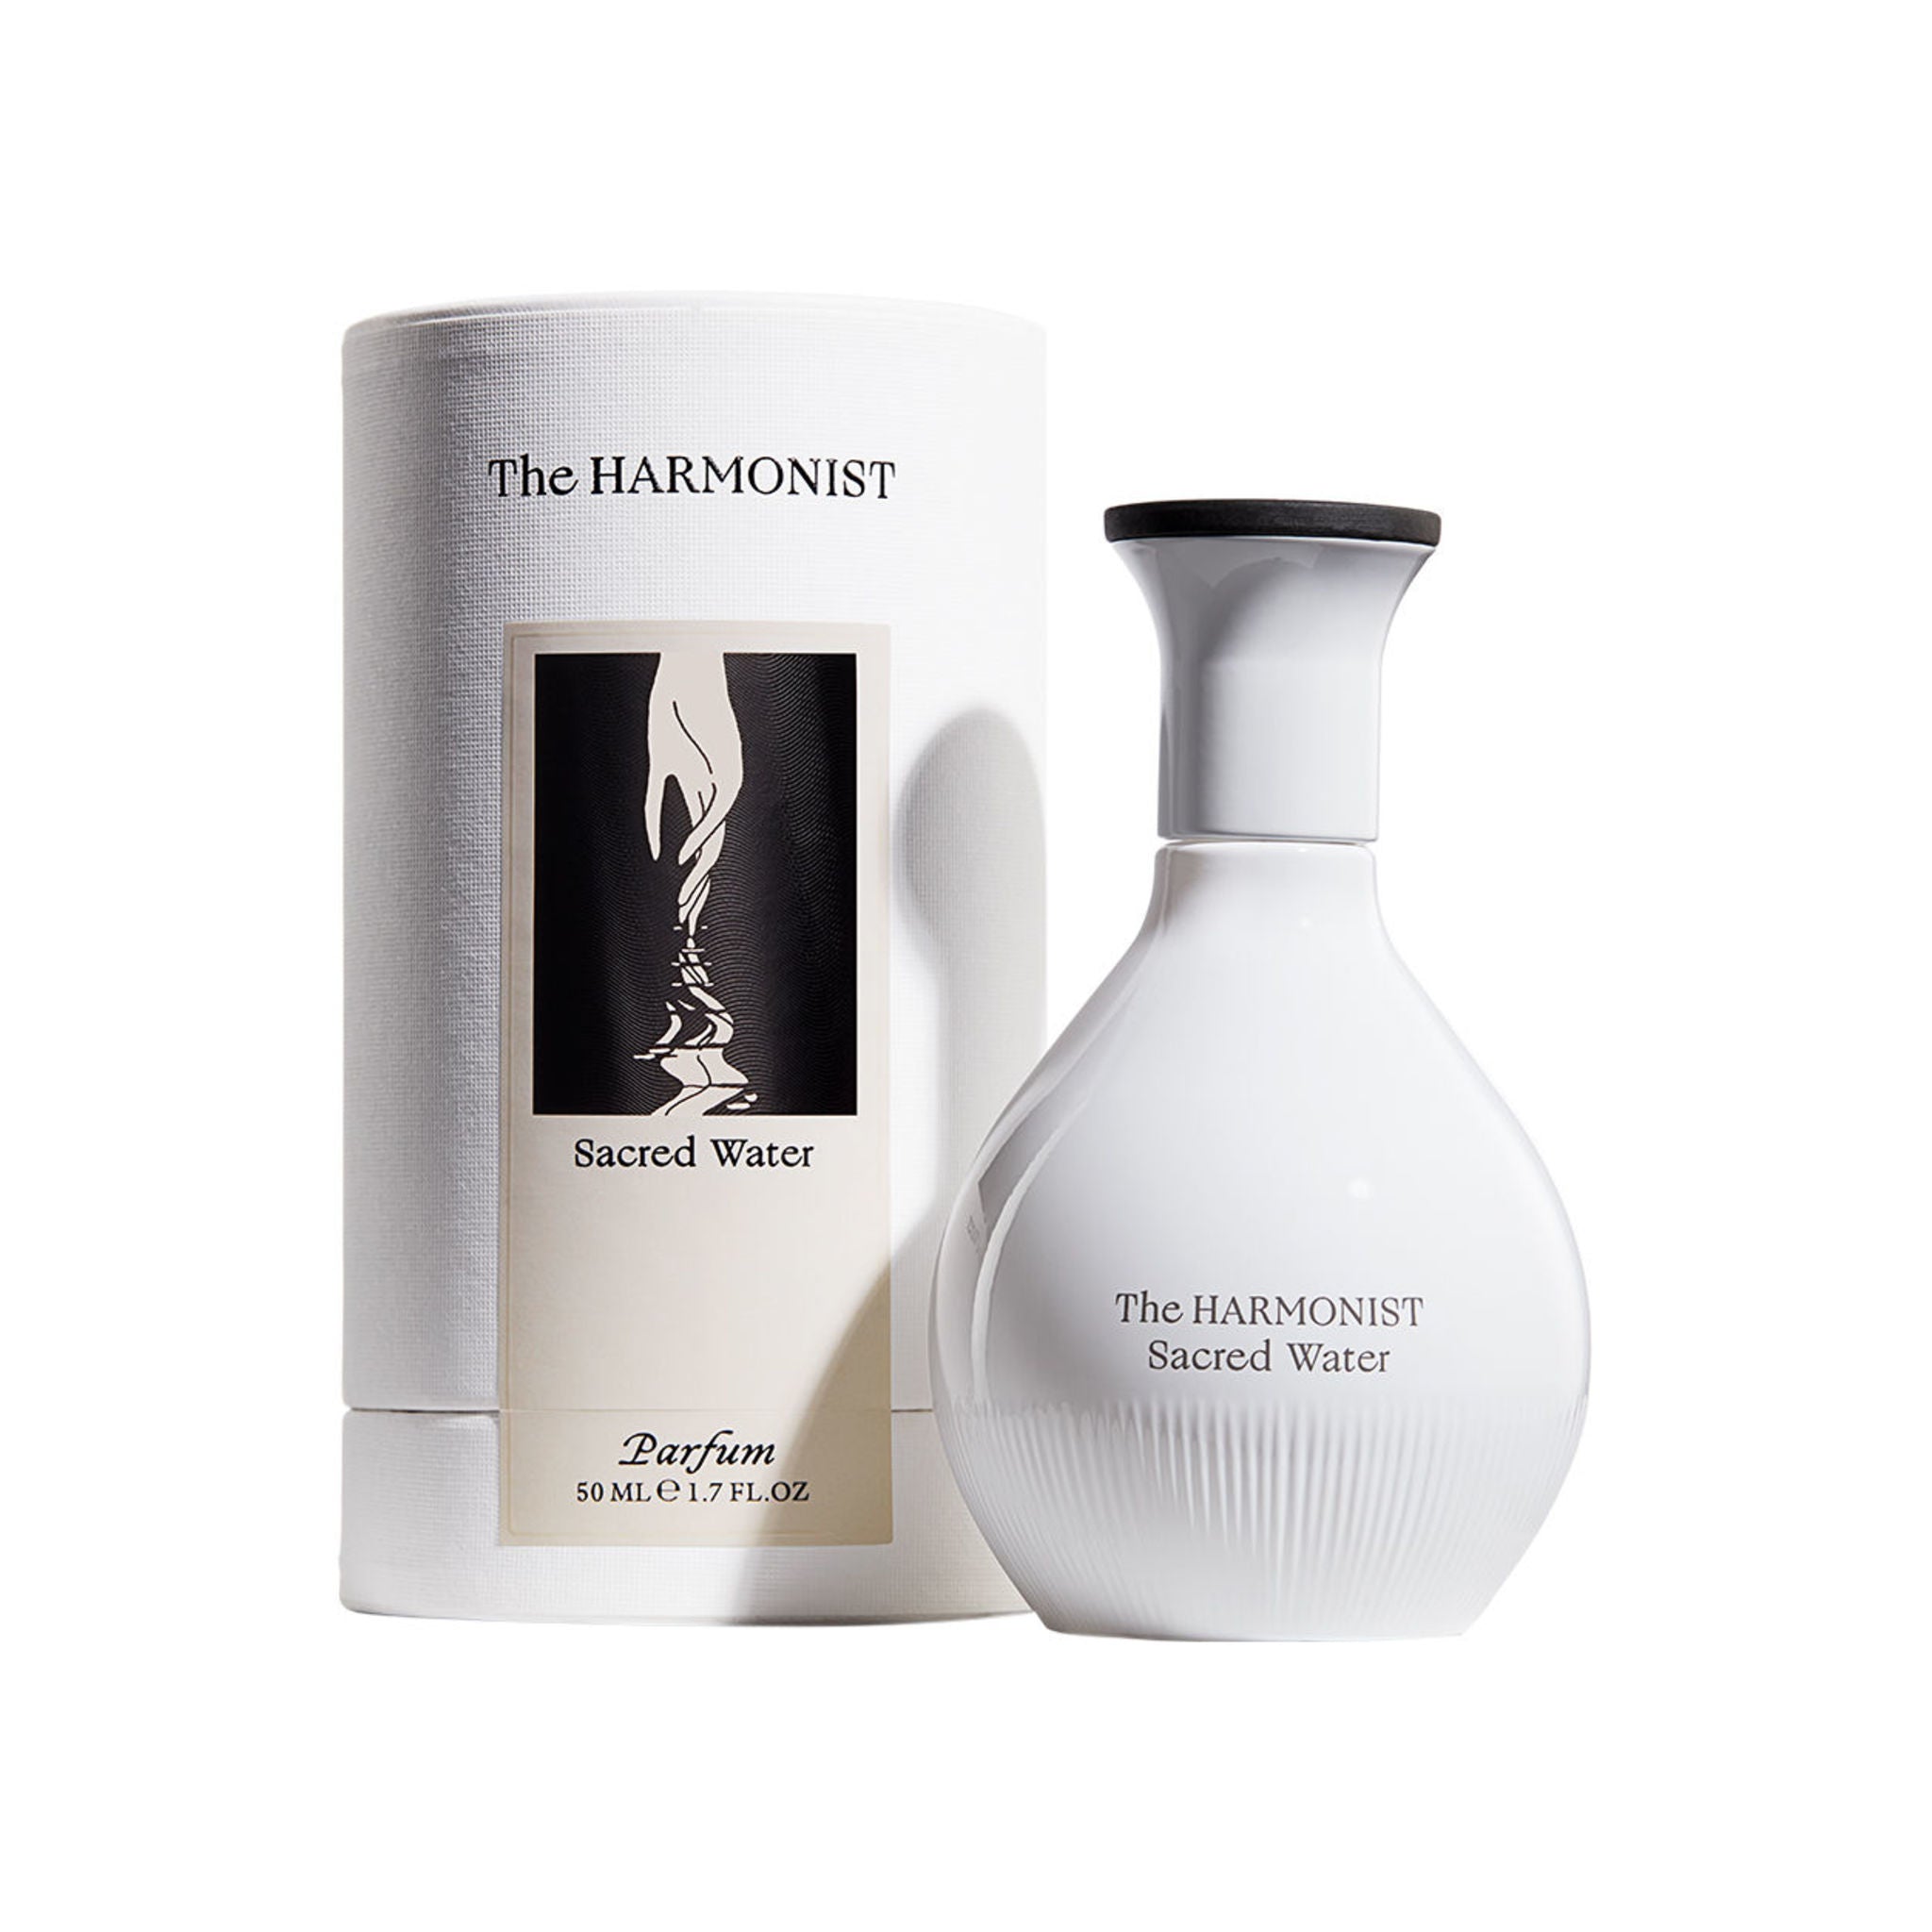 The Harmonist Sacred Water Parfum main image.